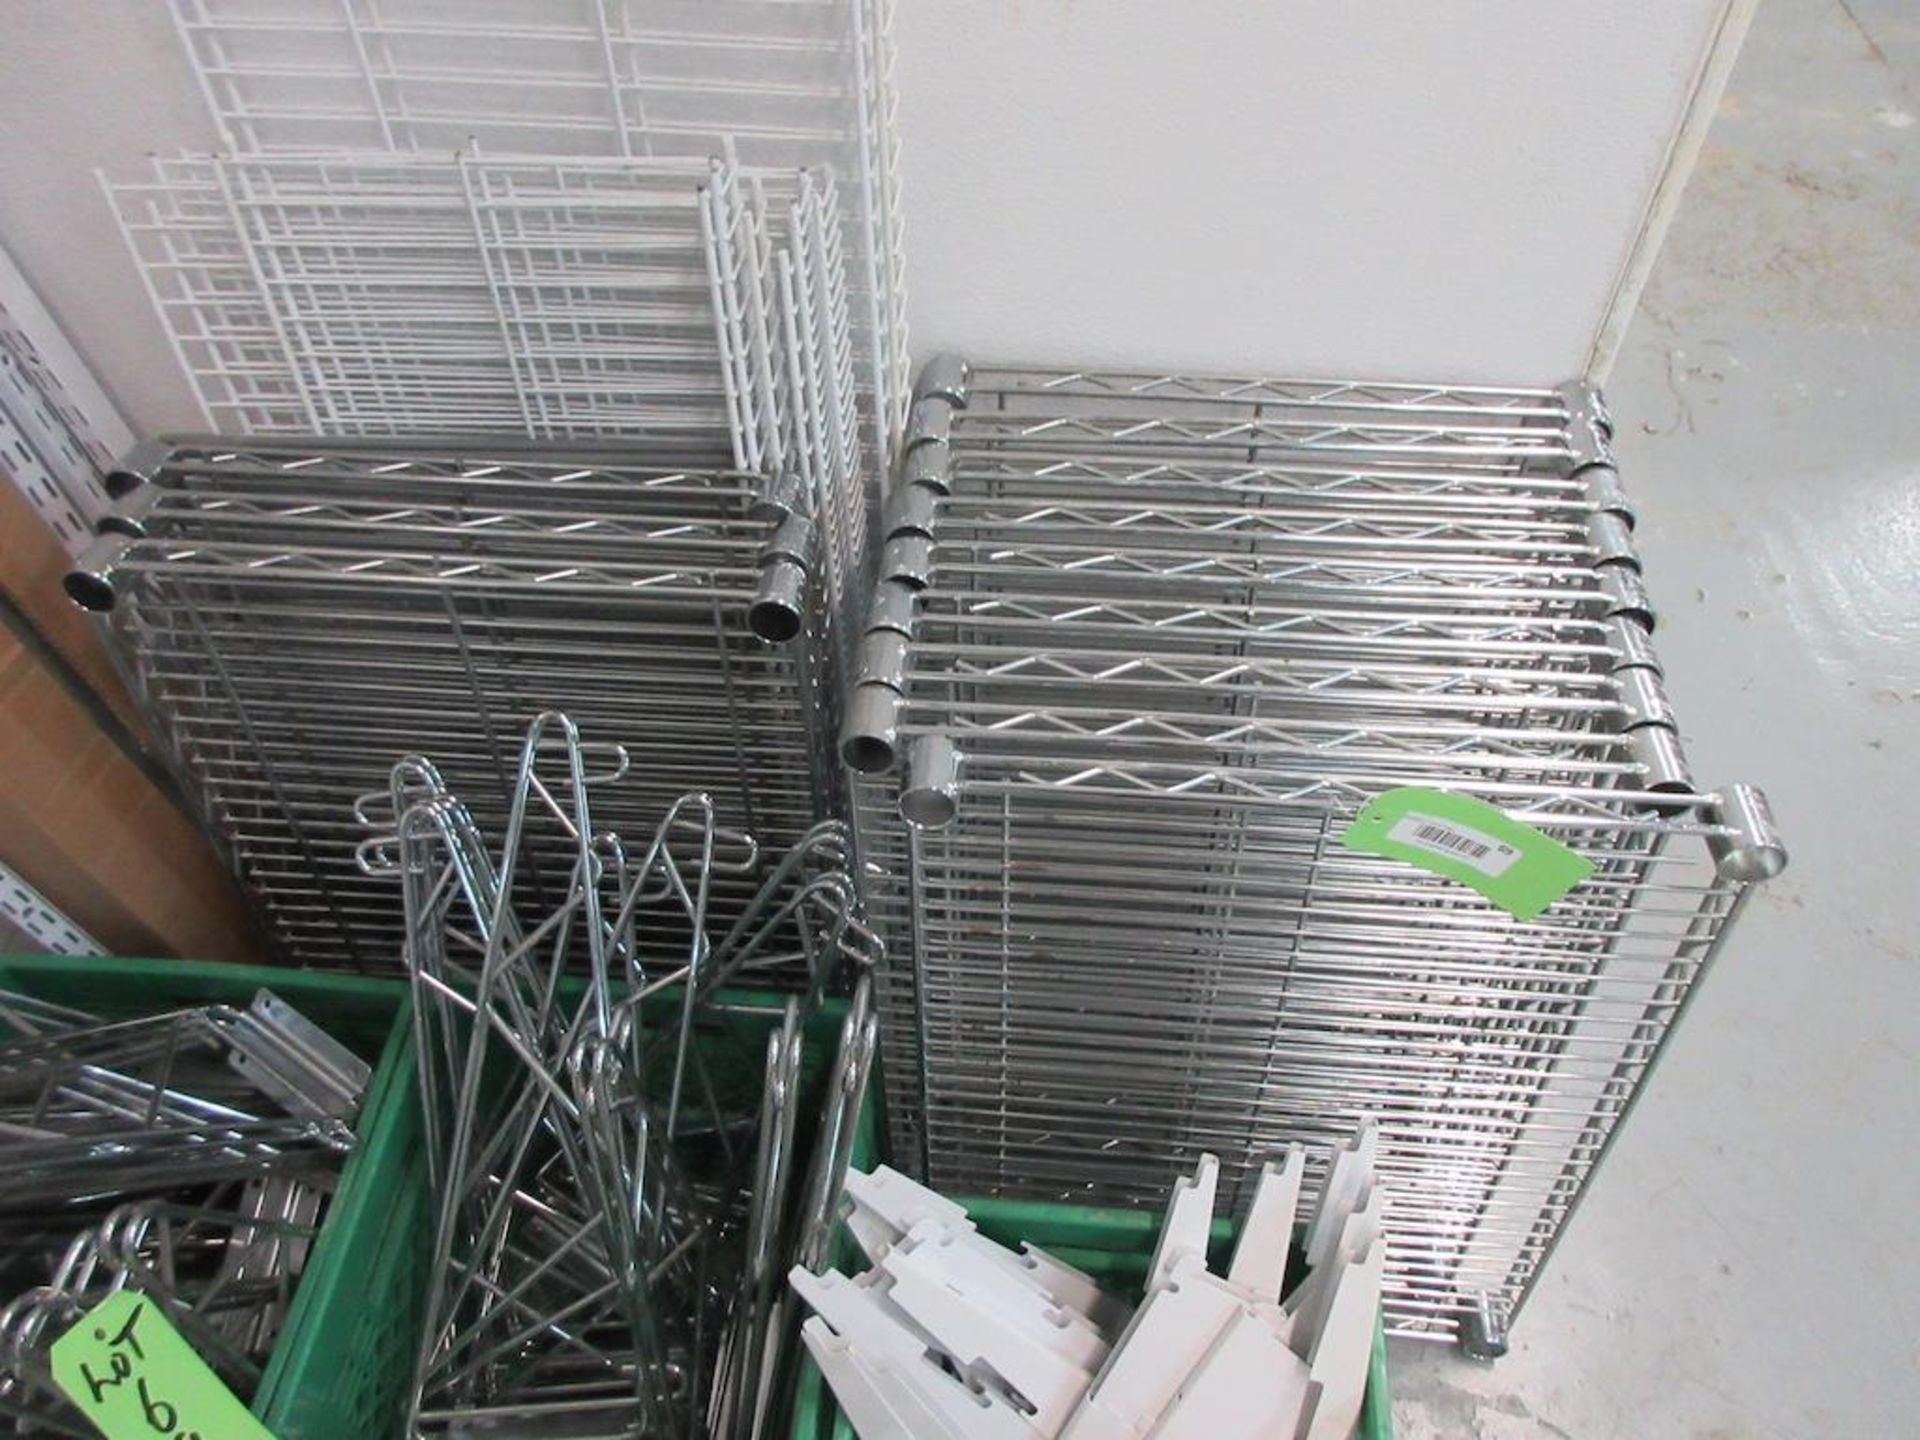 lot asst wire wall mount shelves 18"x24", brackets, etc. - Image 2 of 4